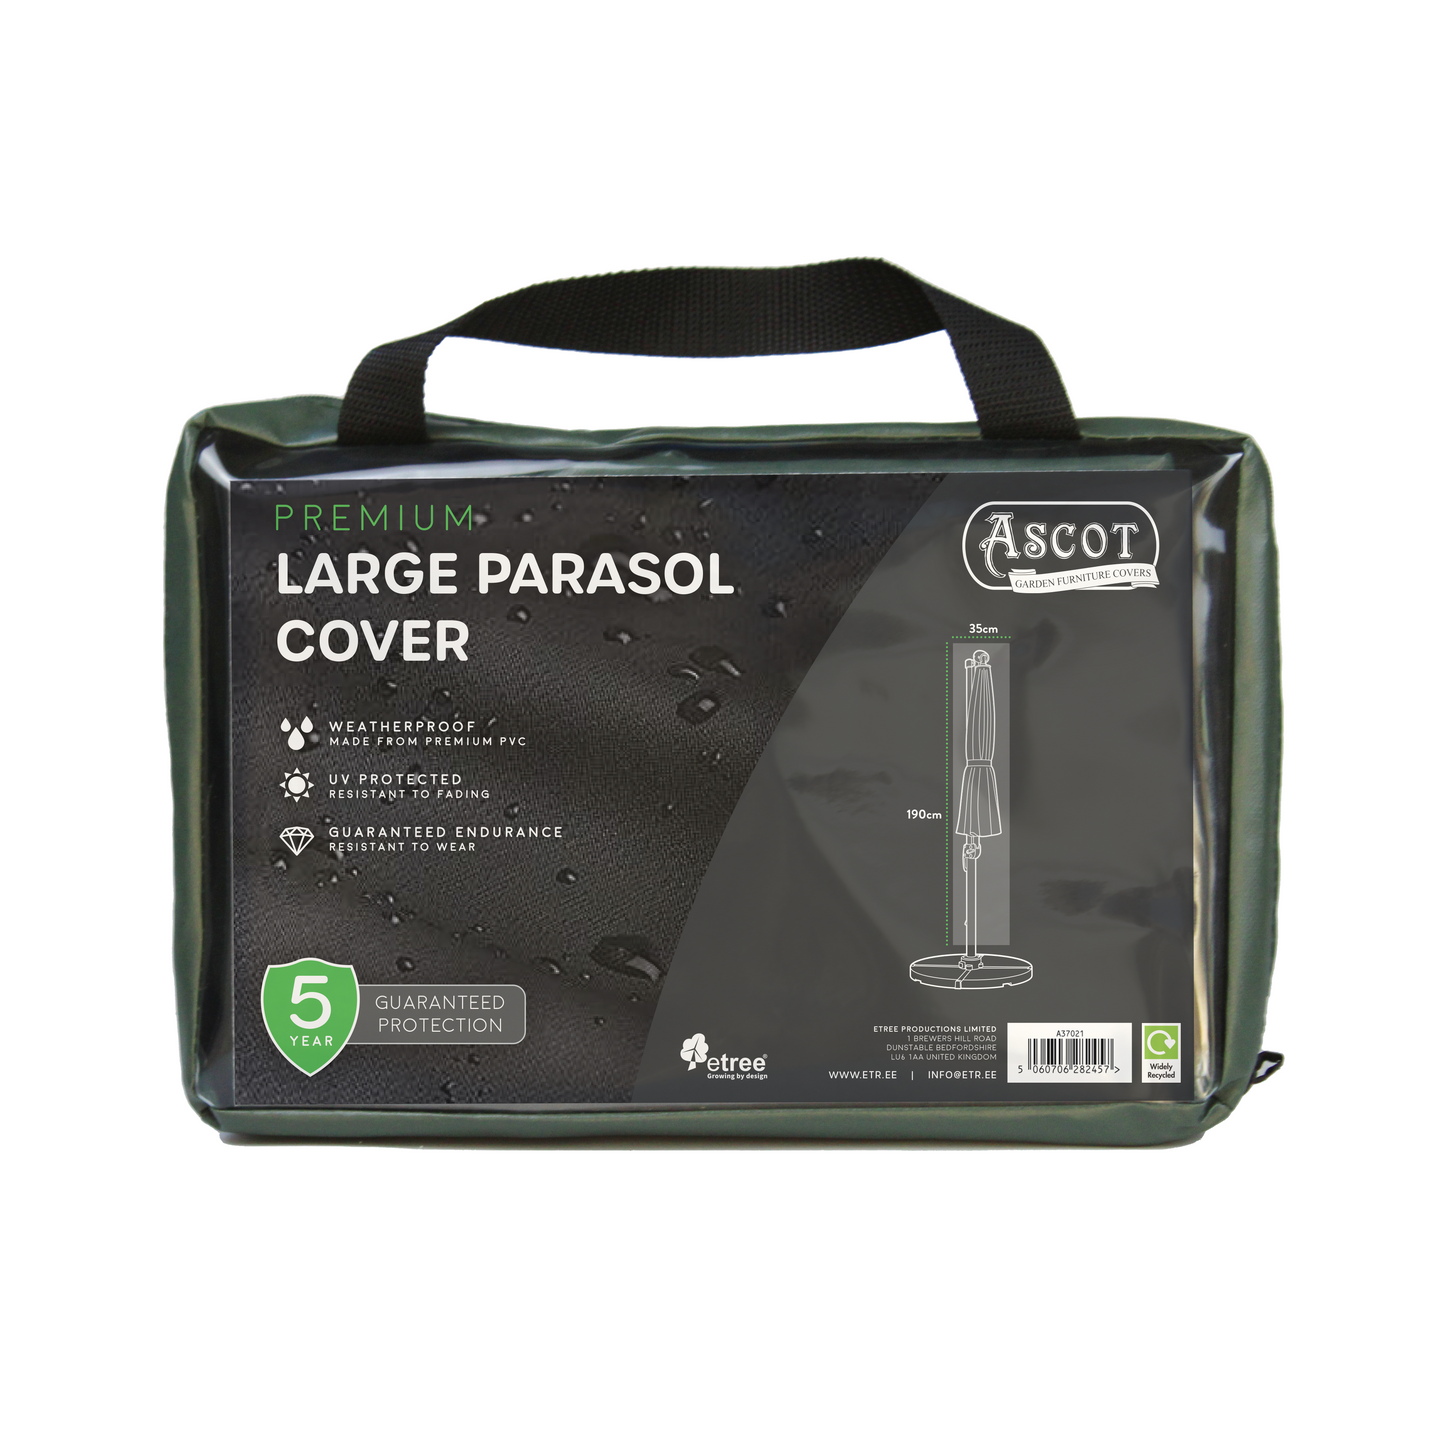 Premium Giant Parasol Cover - 35 (W) X 190 (H) cm